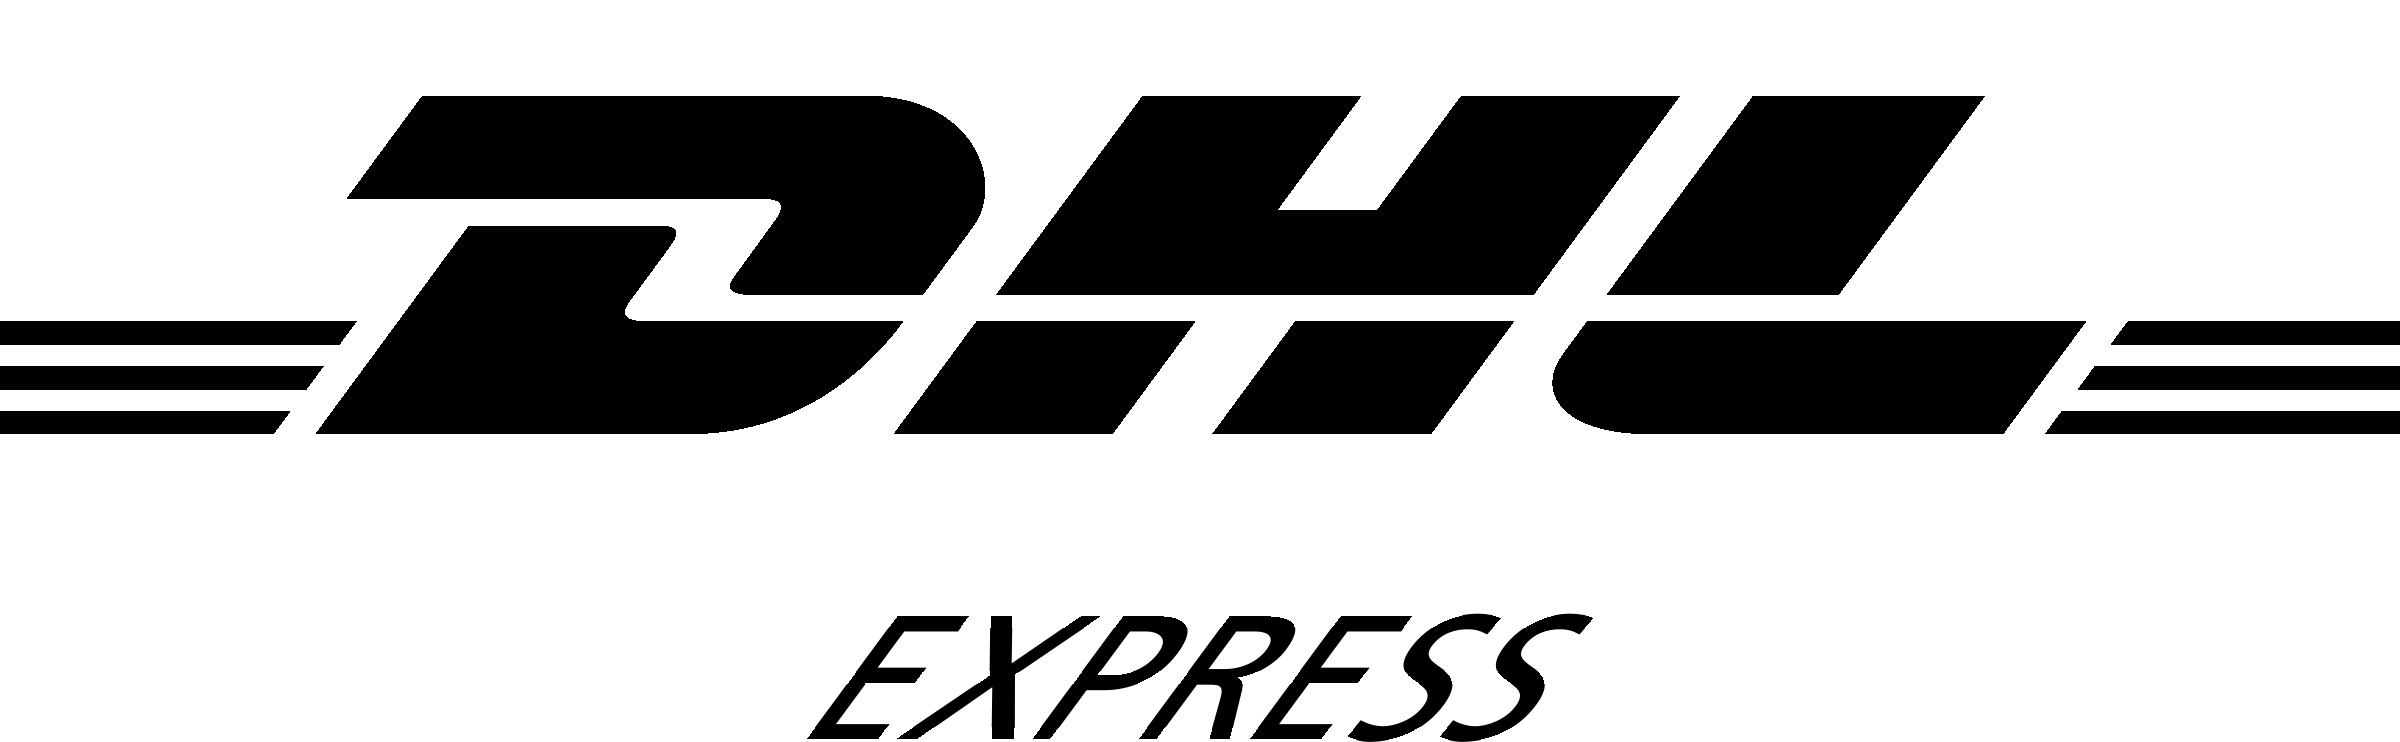 DHL Logo - DHL Express Logo PNG Transparent & SVG Vector - Freebie Supply